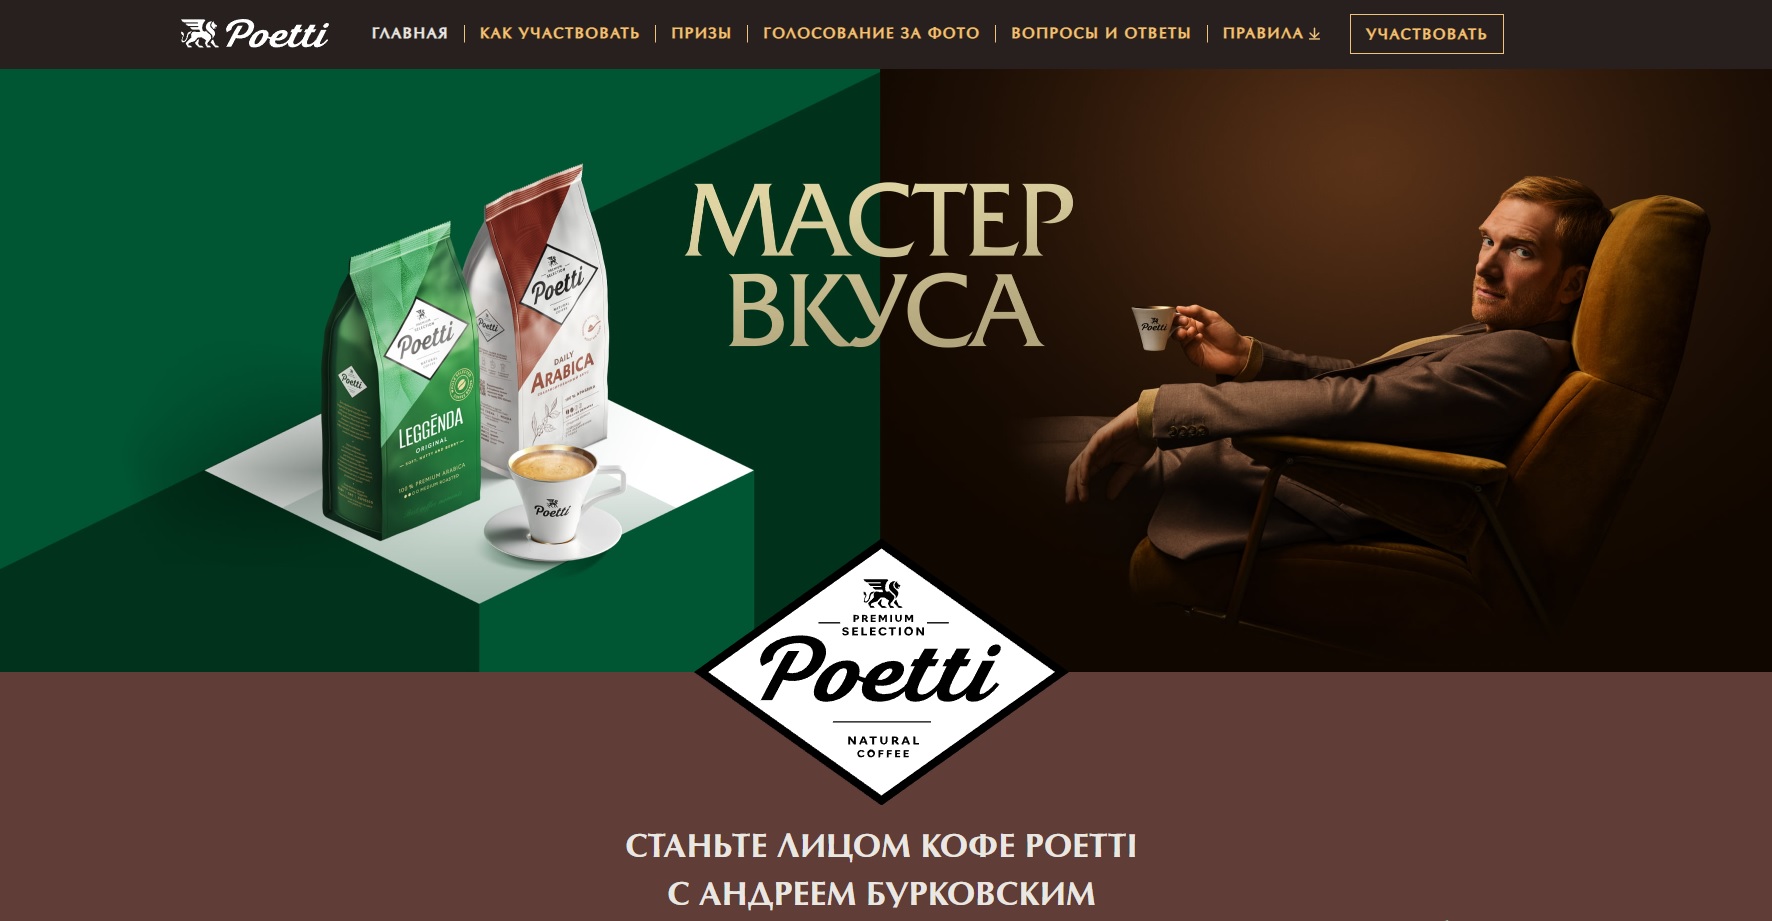 Промо-акция Poetti: «Мастер вкуса»